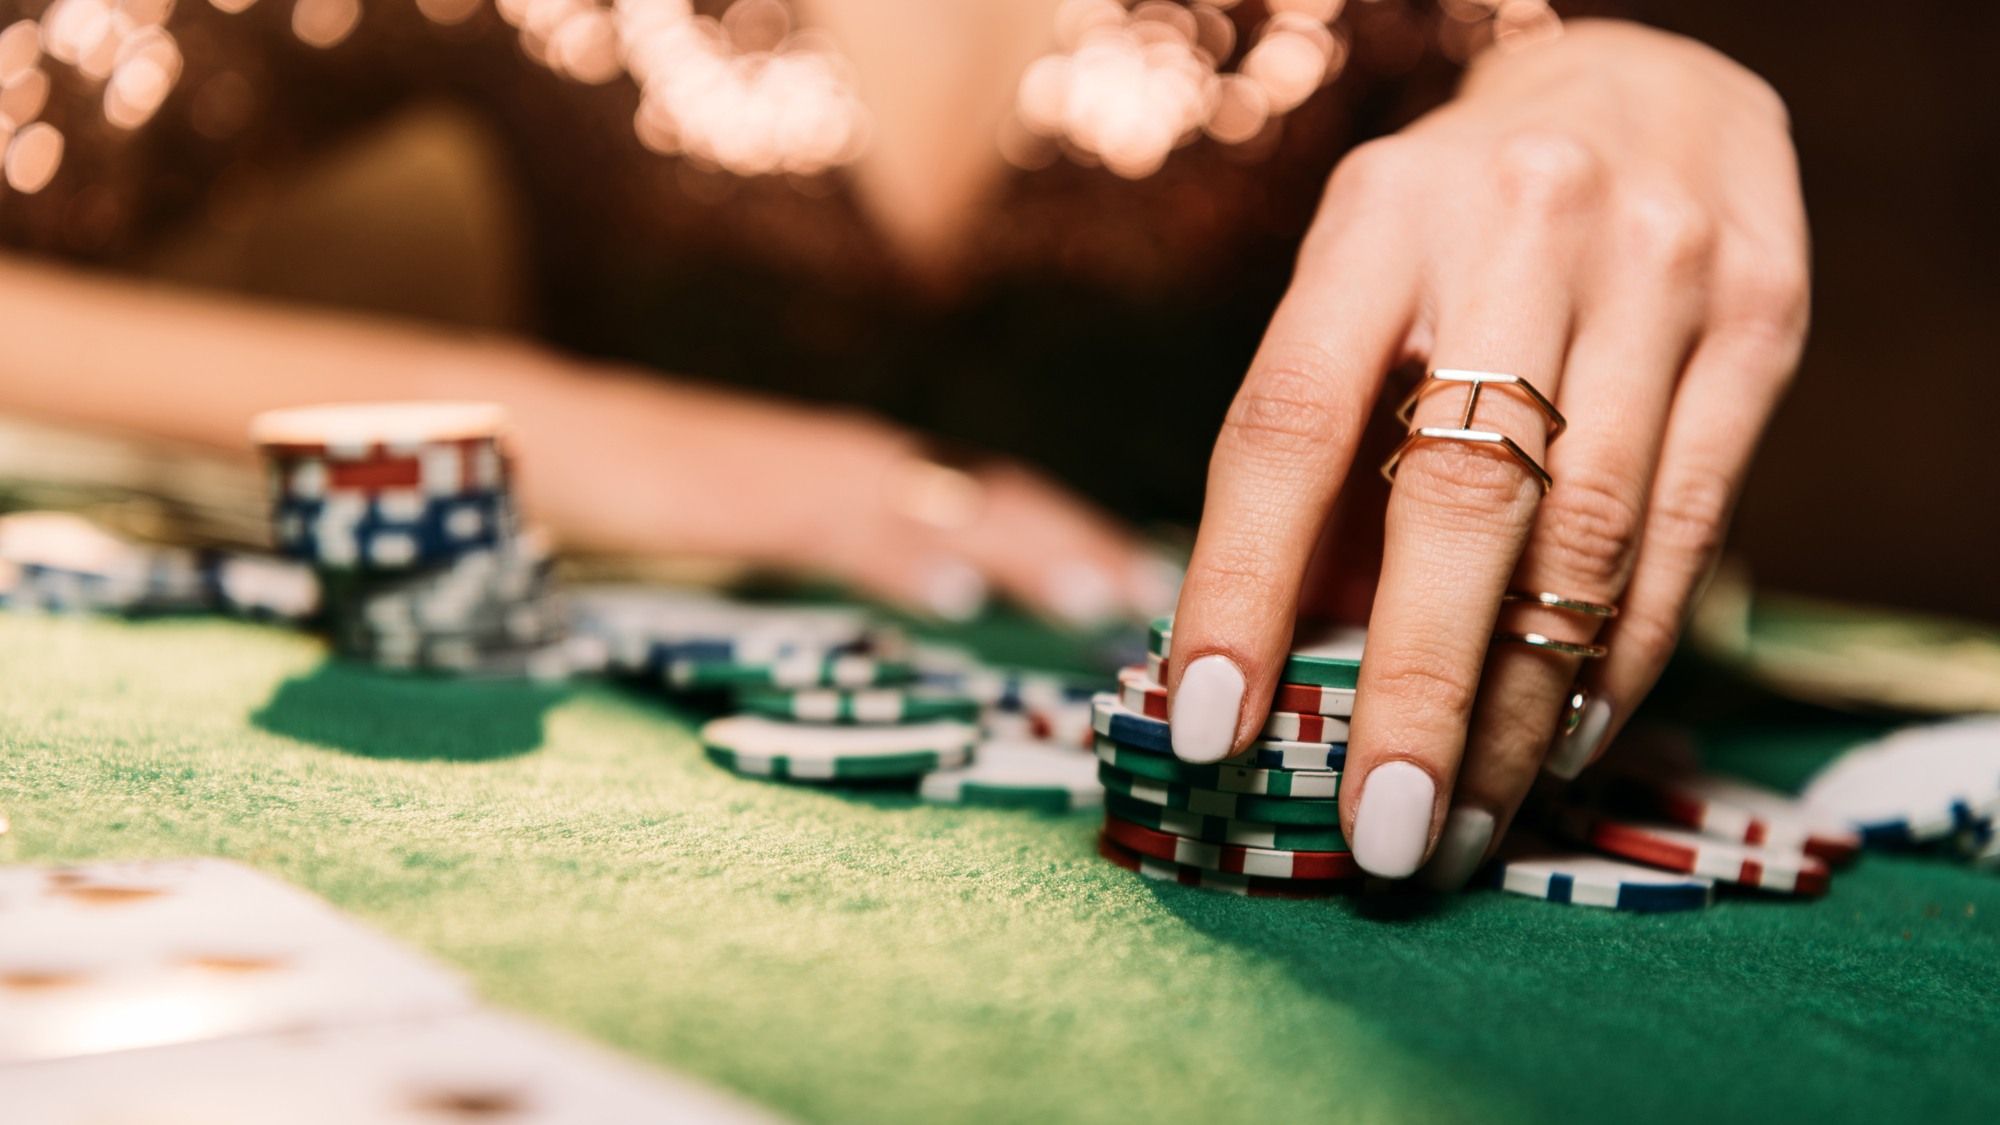 Woman gambling regarding the Abilify class action lawsuit